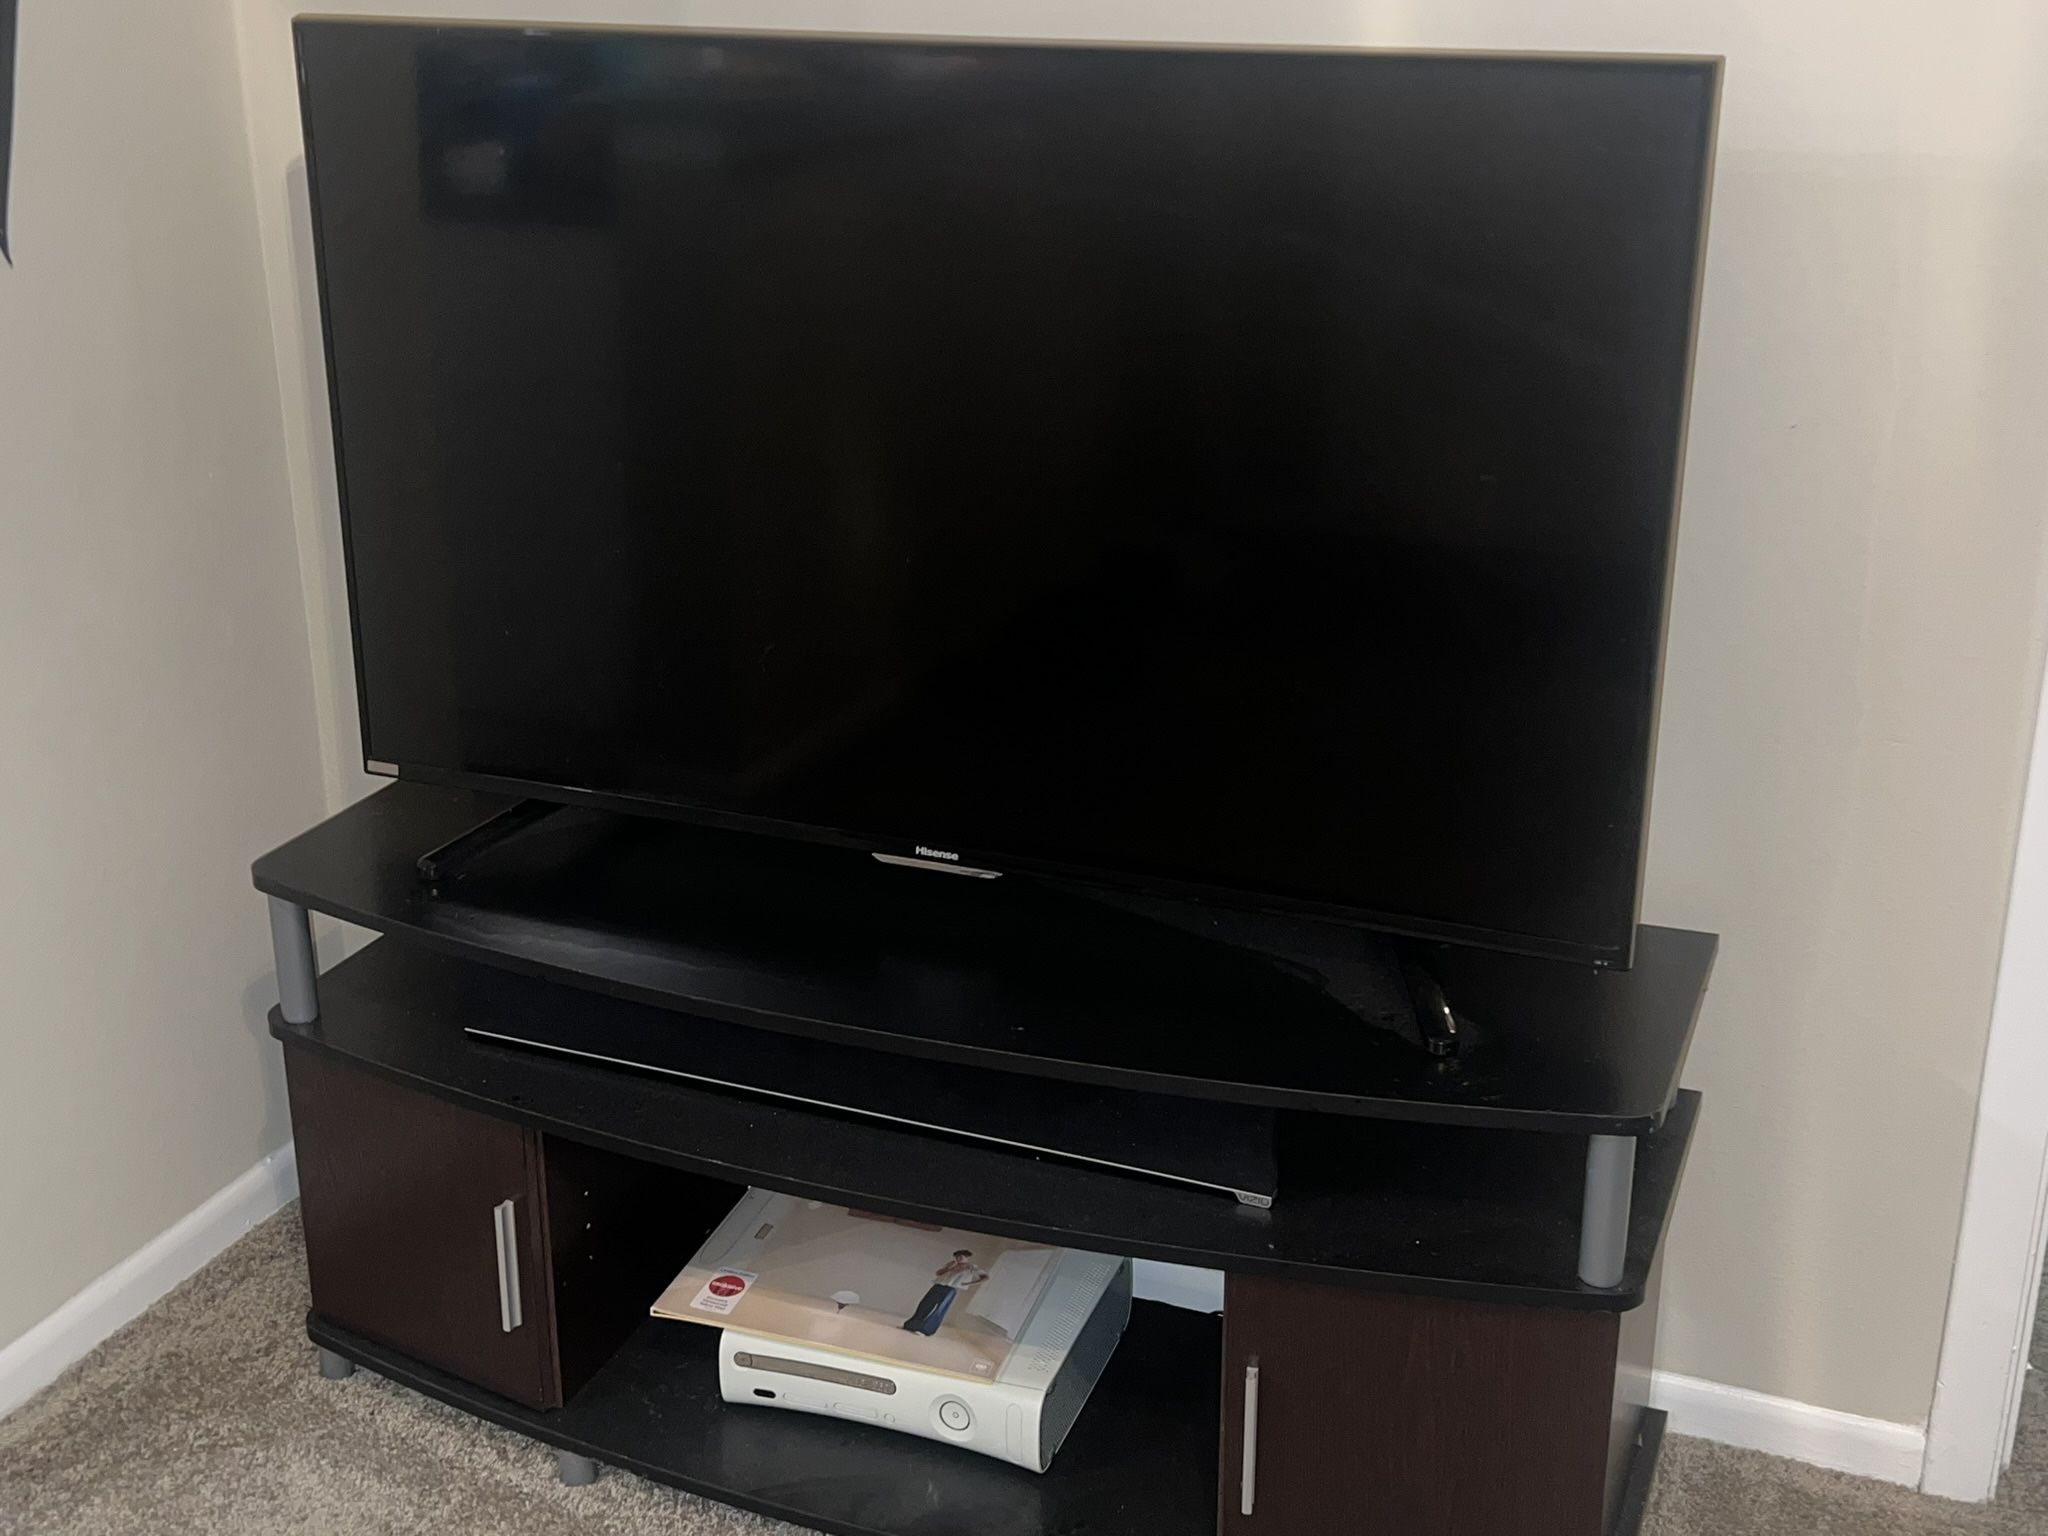 50” Hisense Tv Needs Gone ASAP